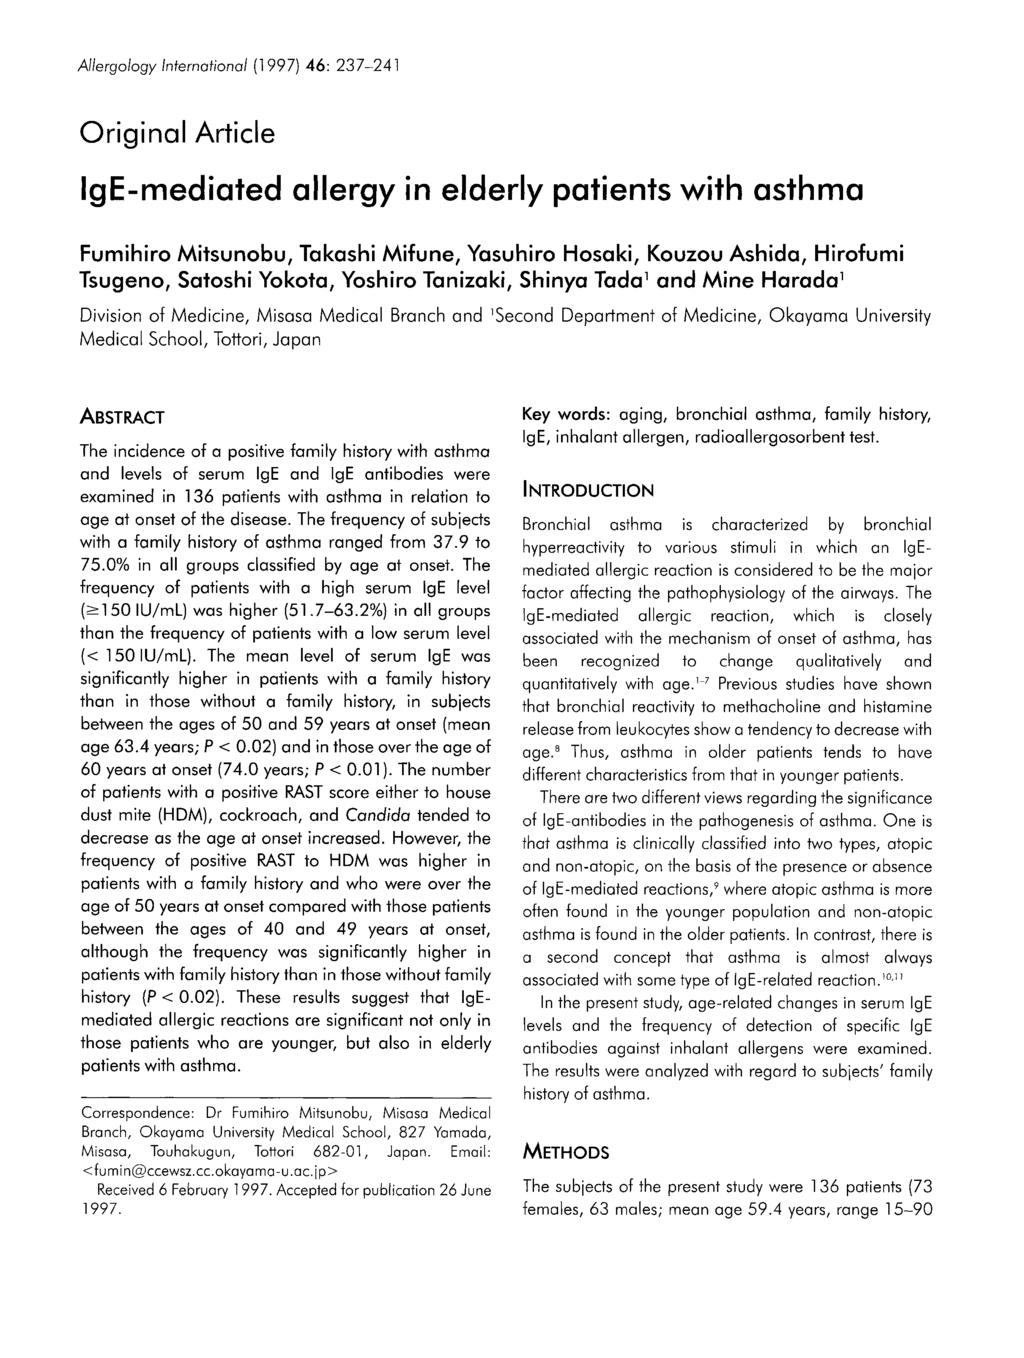 Allergology international (1997) 46: 237-241 Original Article IgE-mediated allergy in elderly patients with asthma Fumihiro Mitsunobu, Takashi Mifune, Yasuhiro Hosaki, Kouzou Ashida, Hirofumi